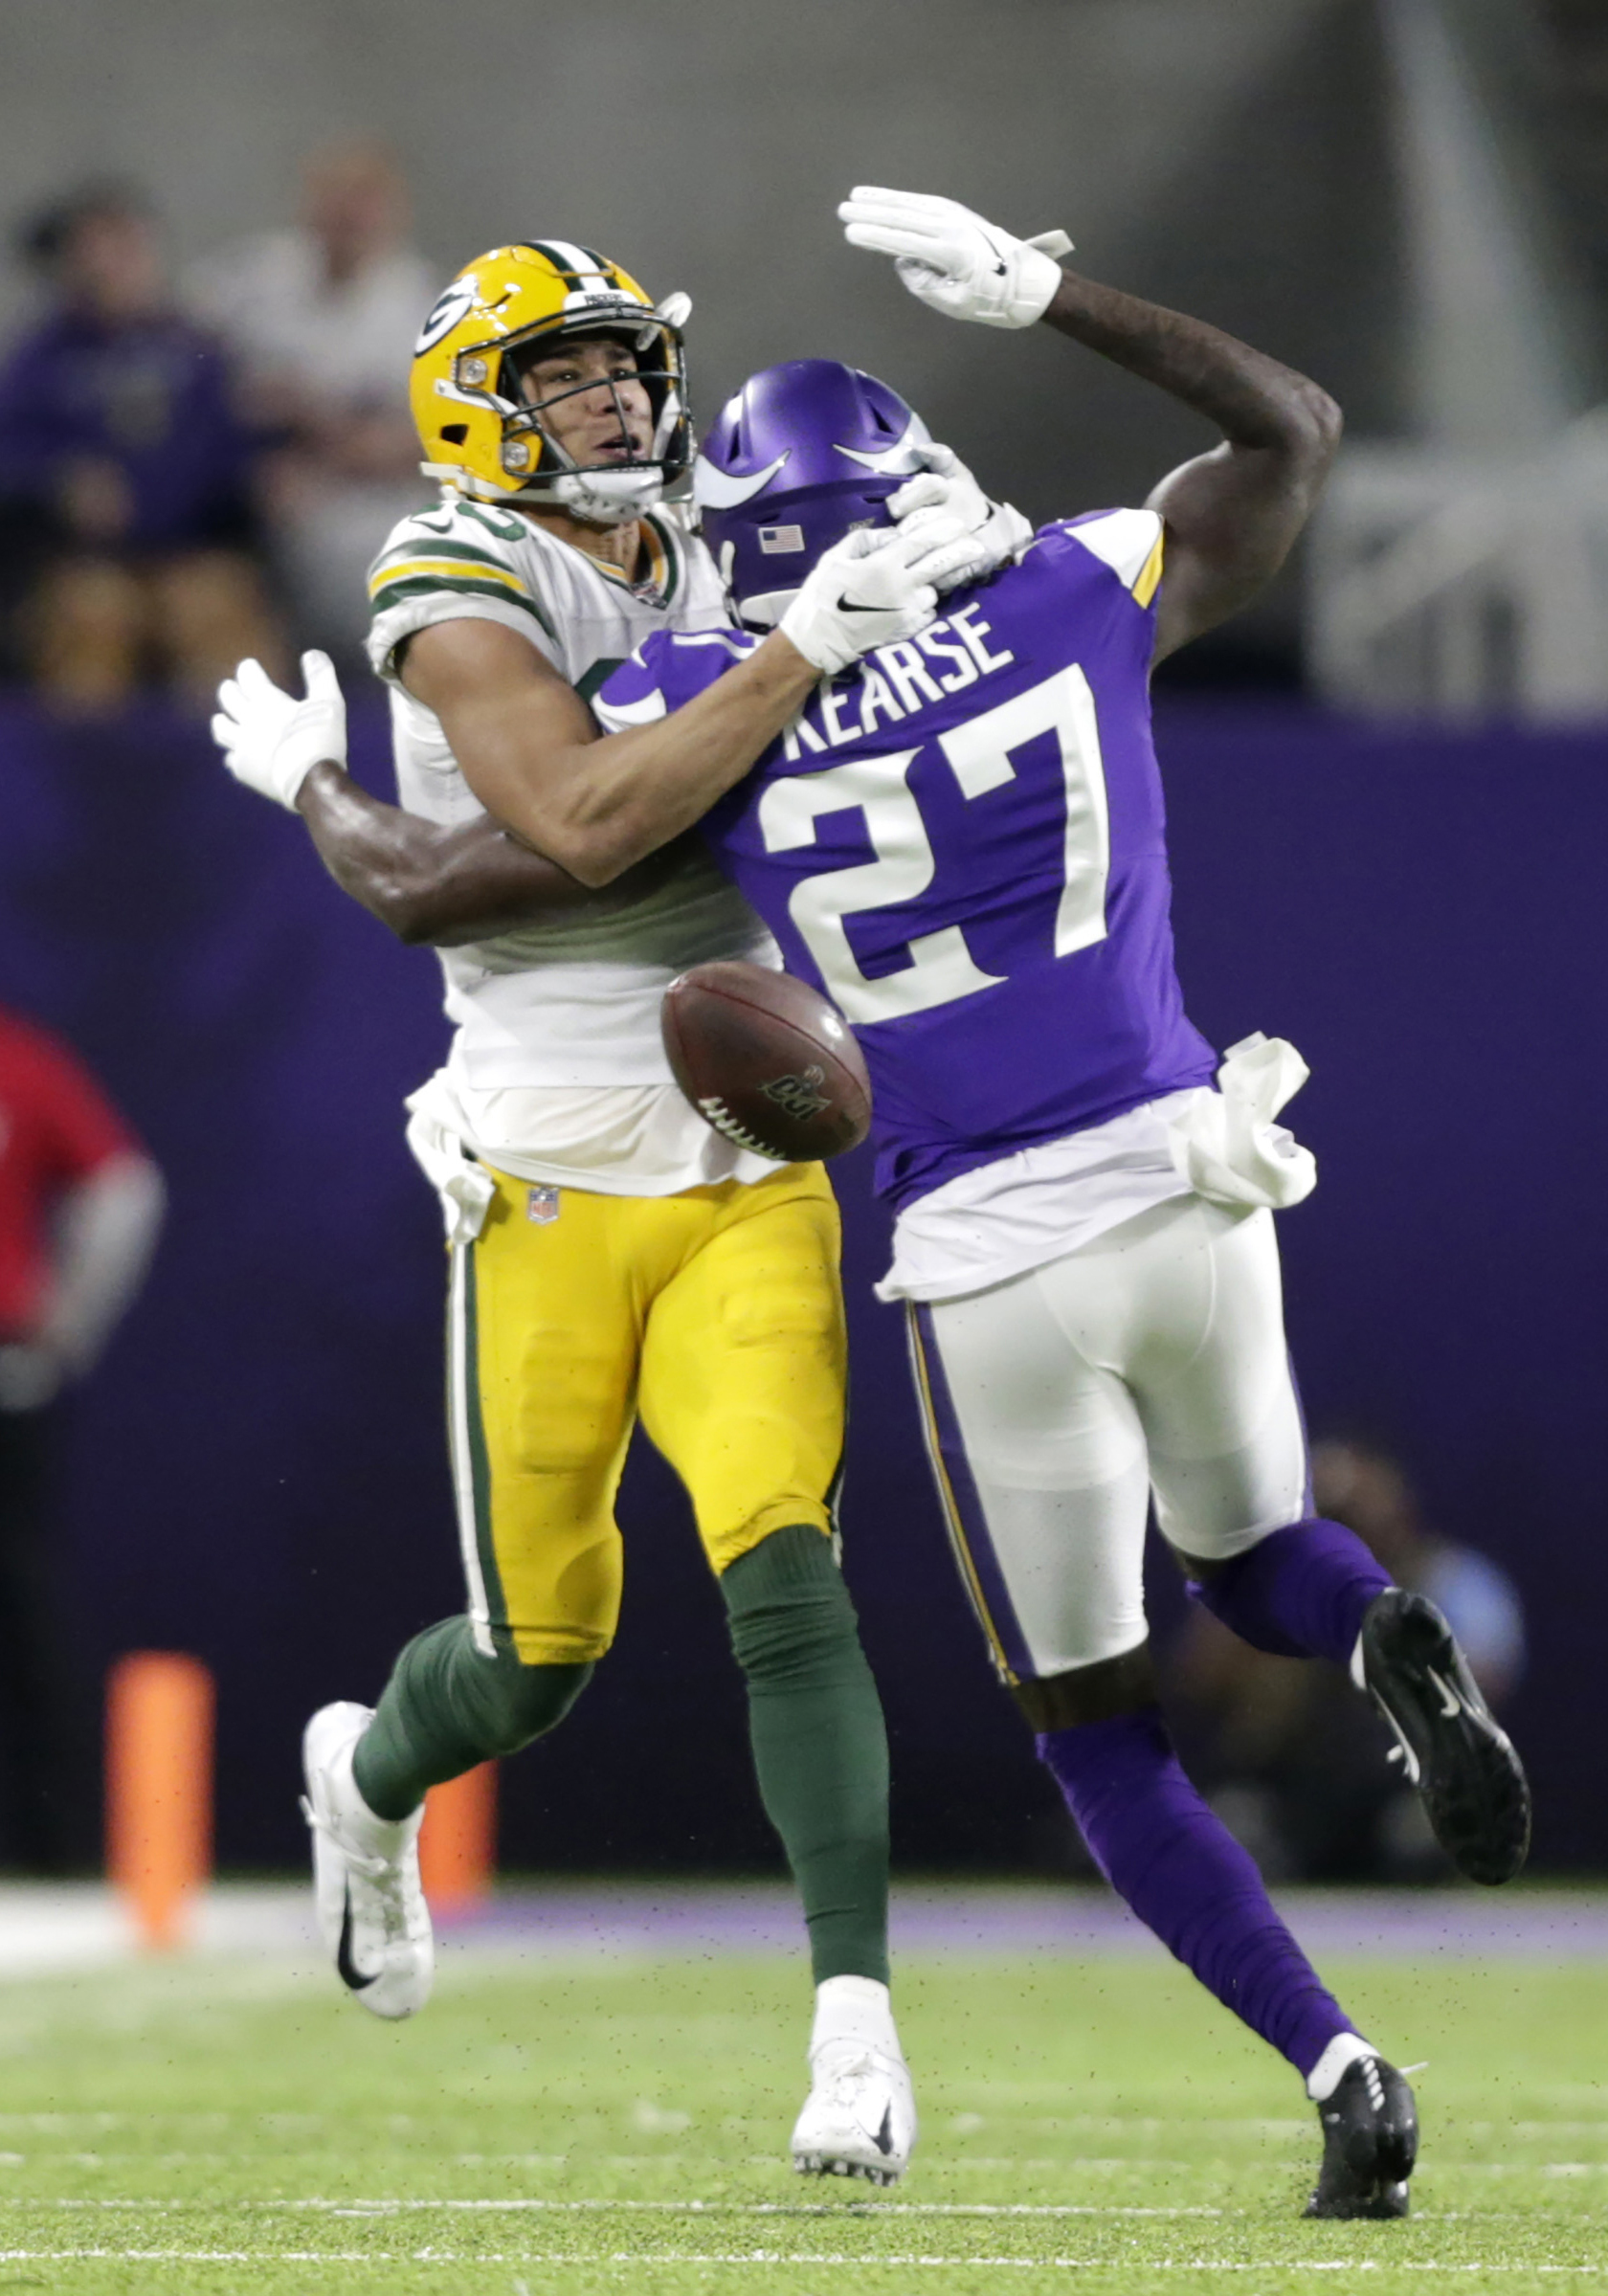 A Vikings defenders breaks up a Packers pass